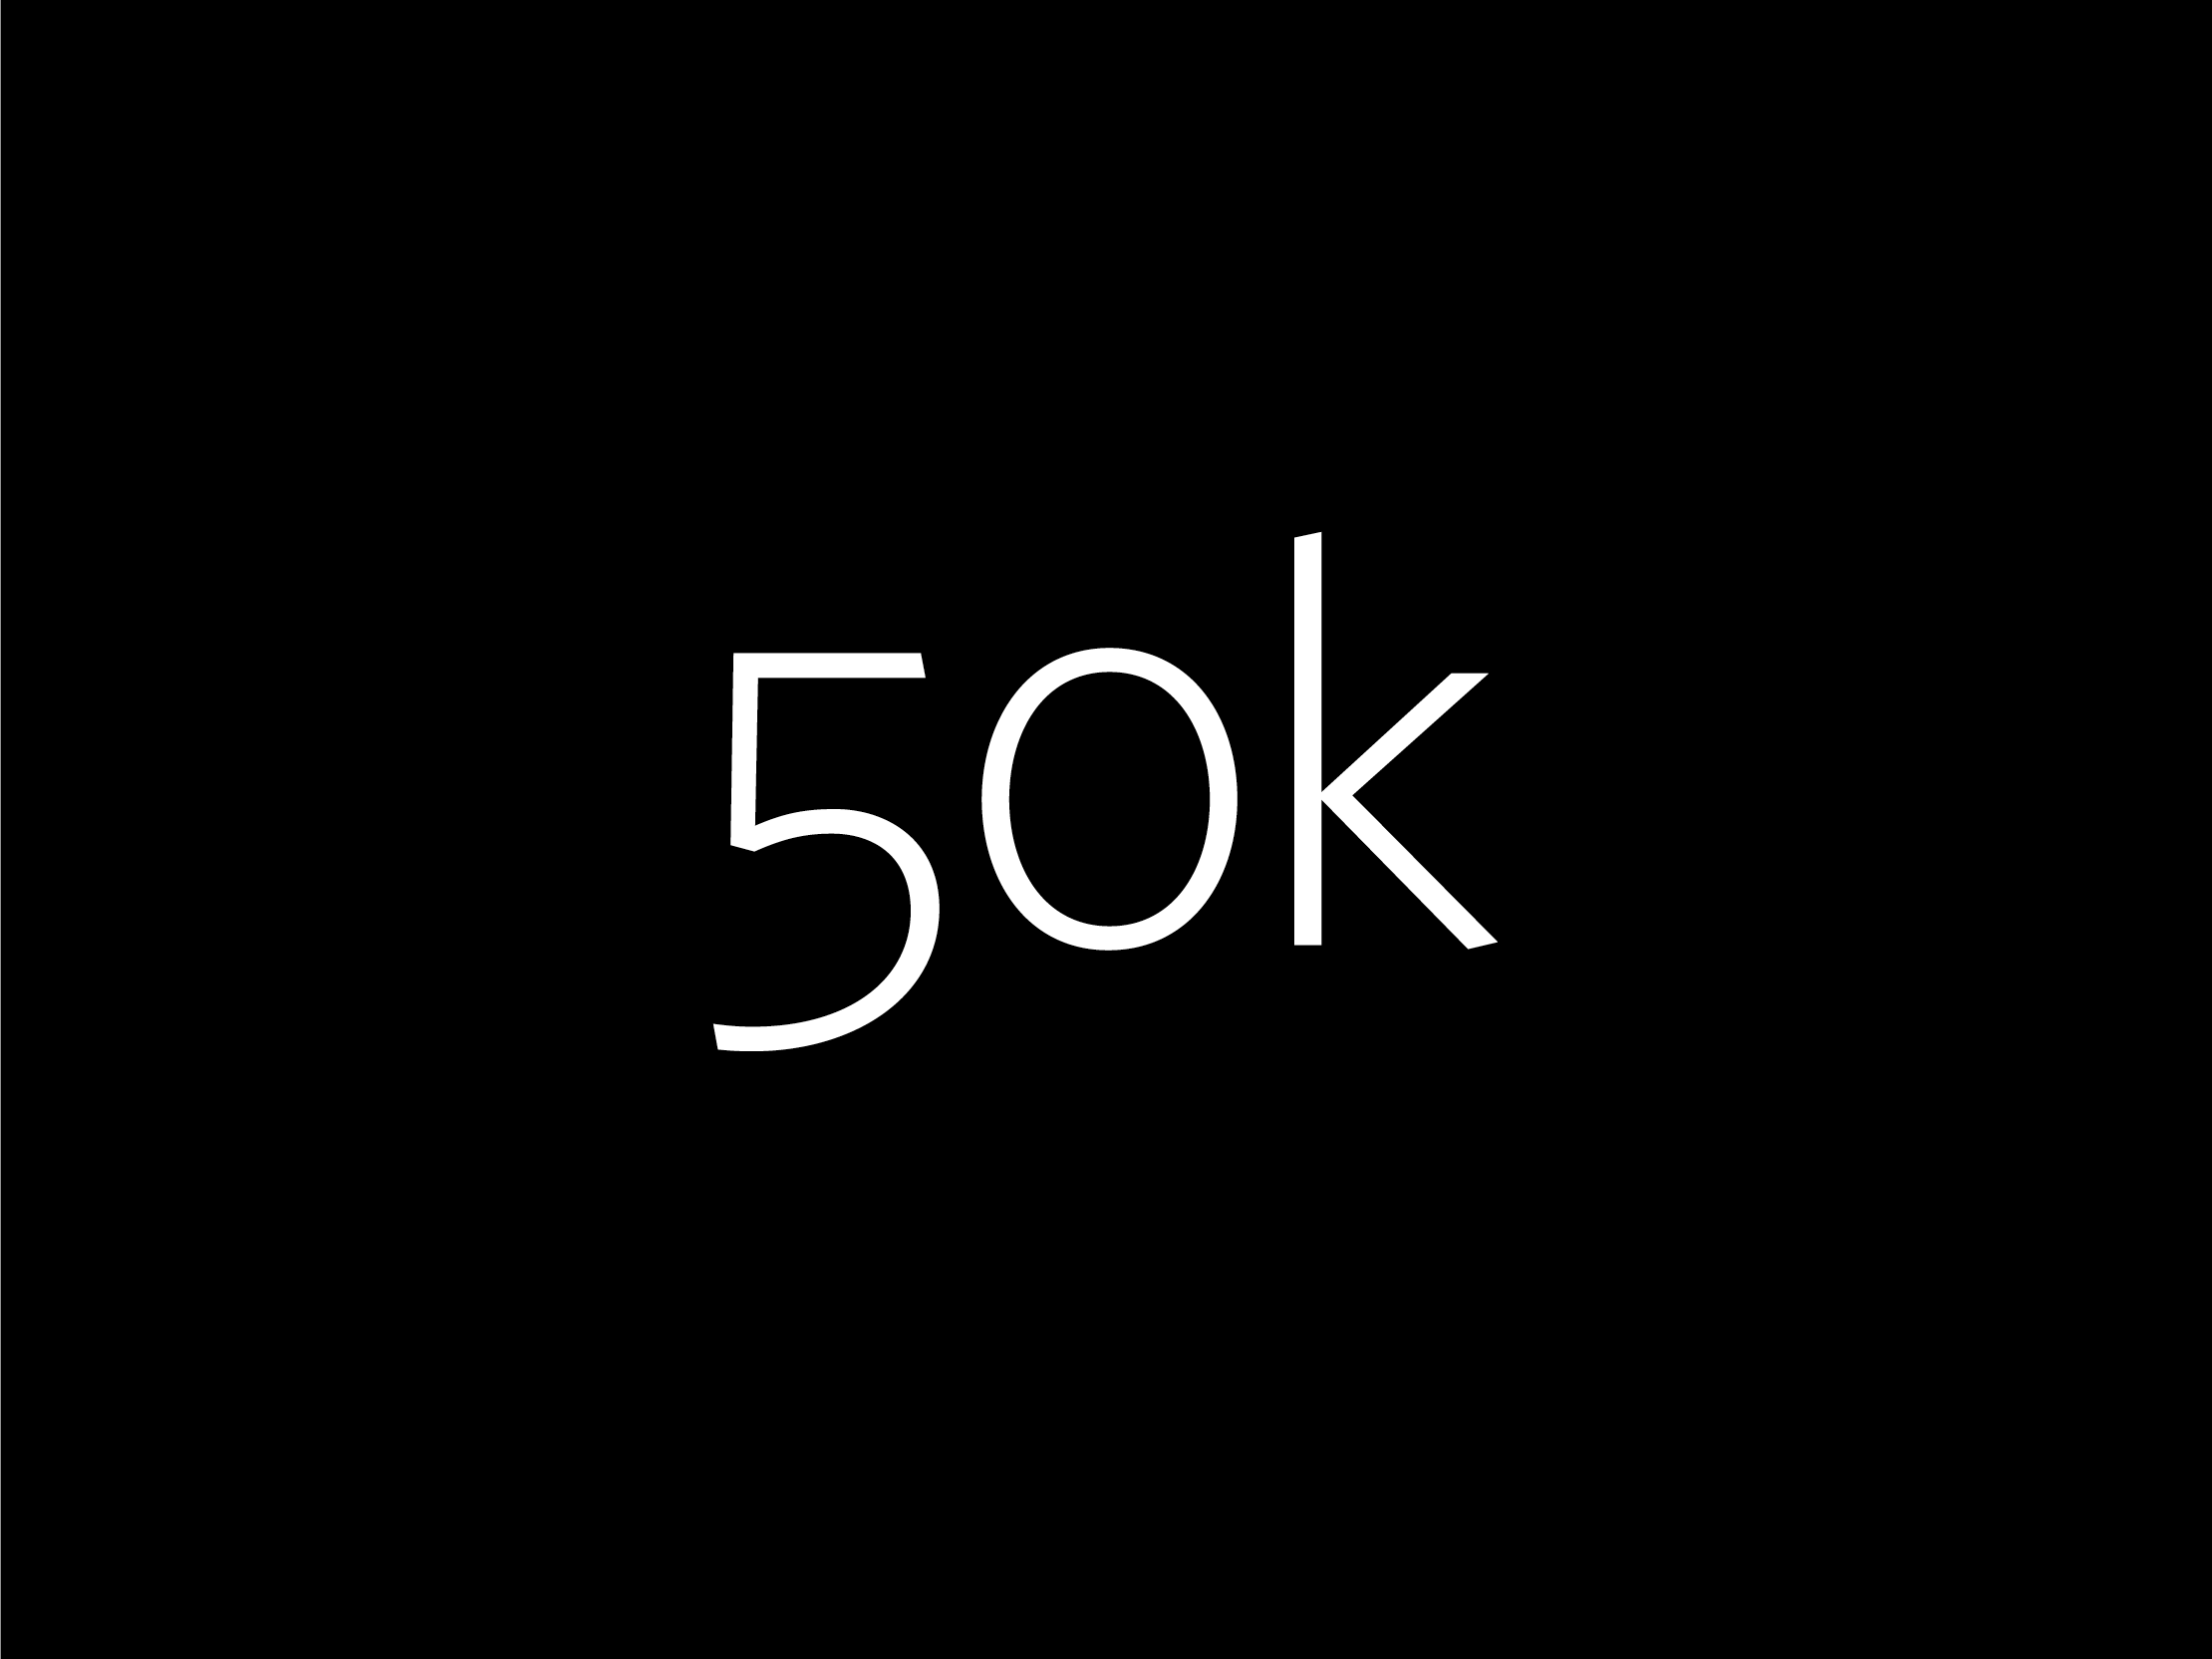 50k-logo